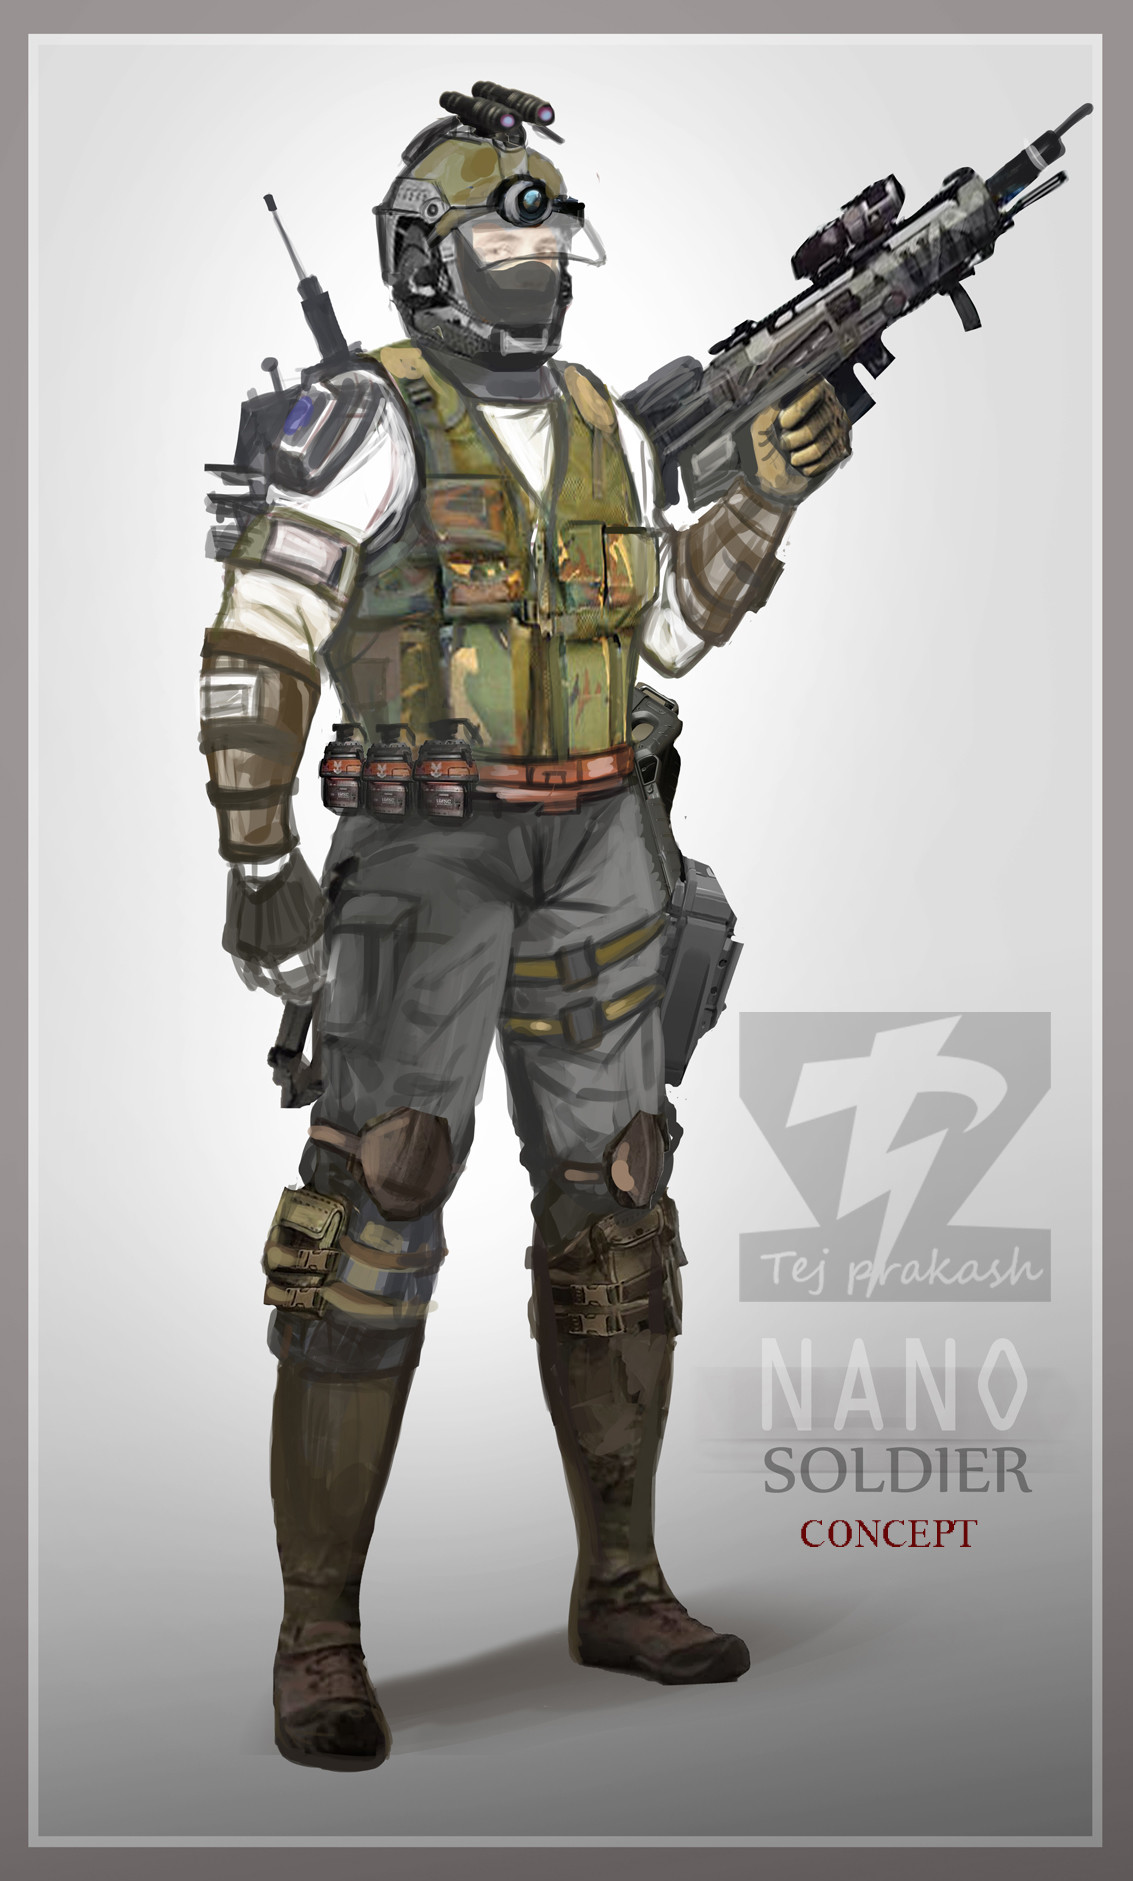 Tej prakash - Future Soldier